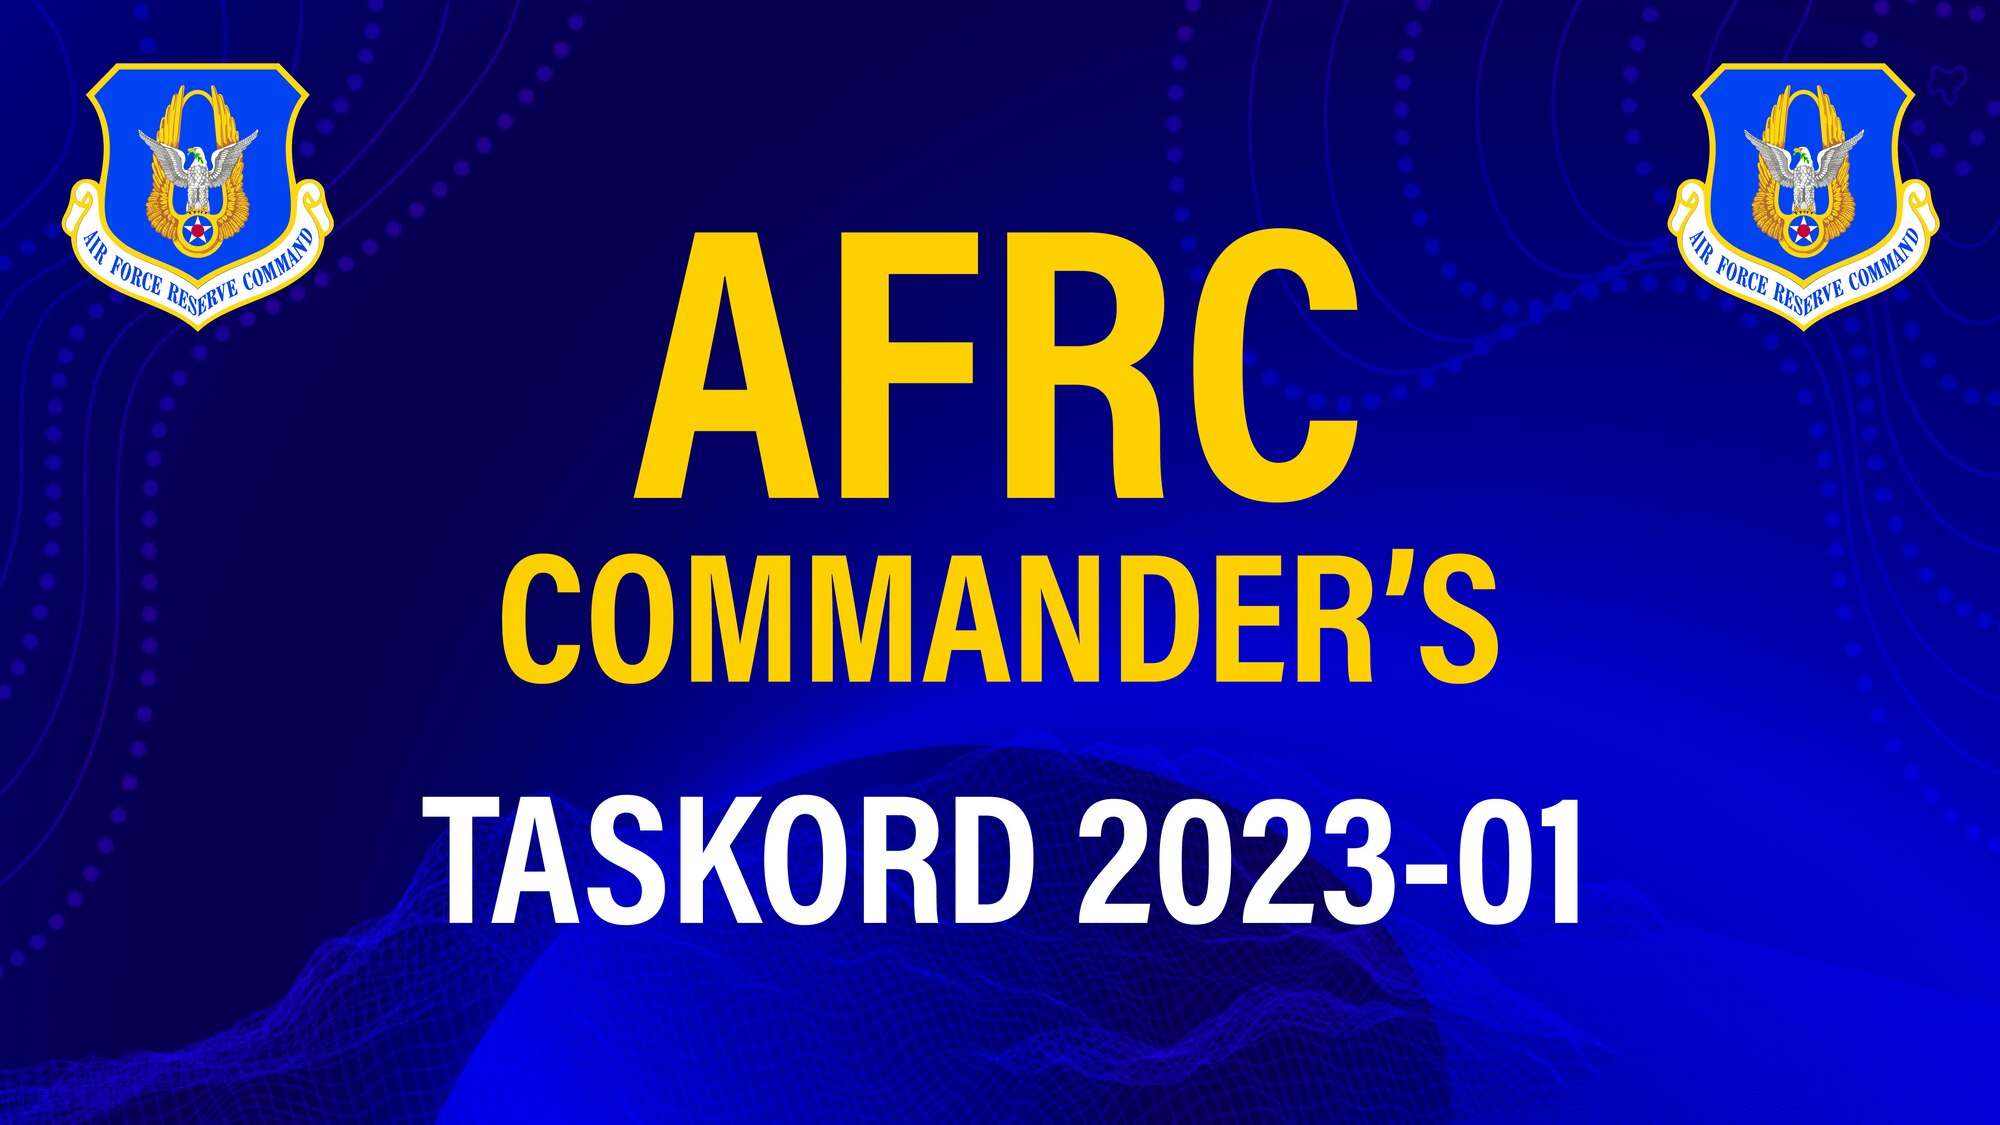 Graphic image that states AFRC COMMANDER'S TASKORD 3023-01